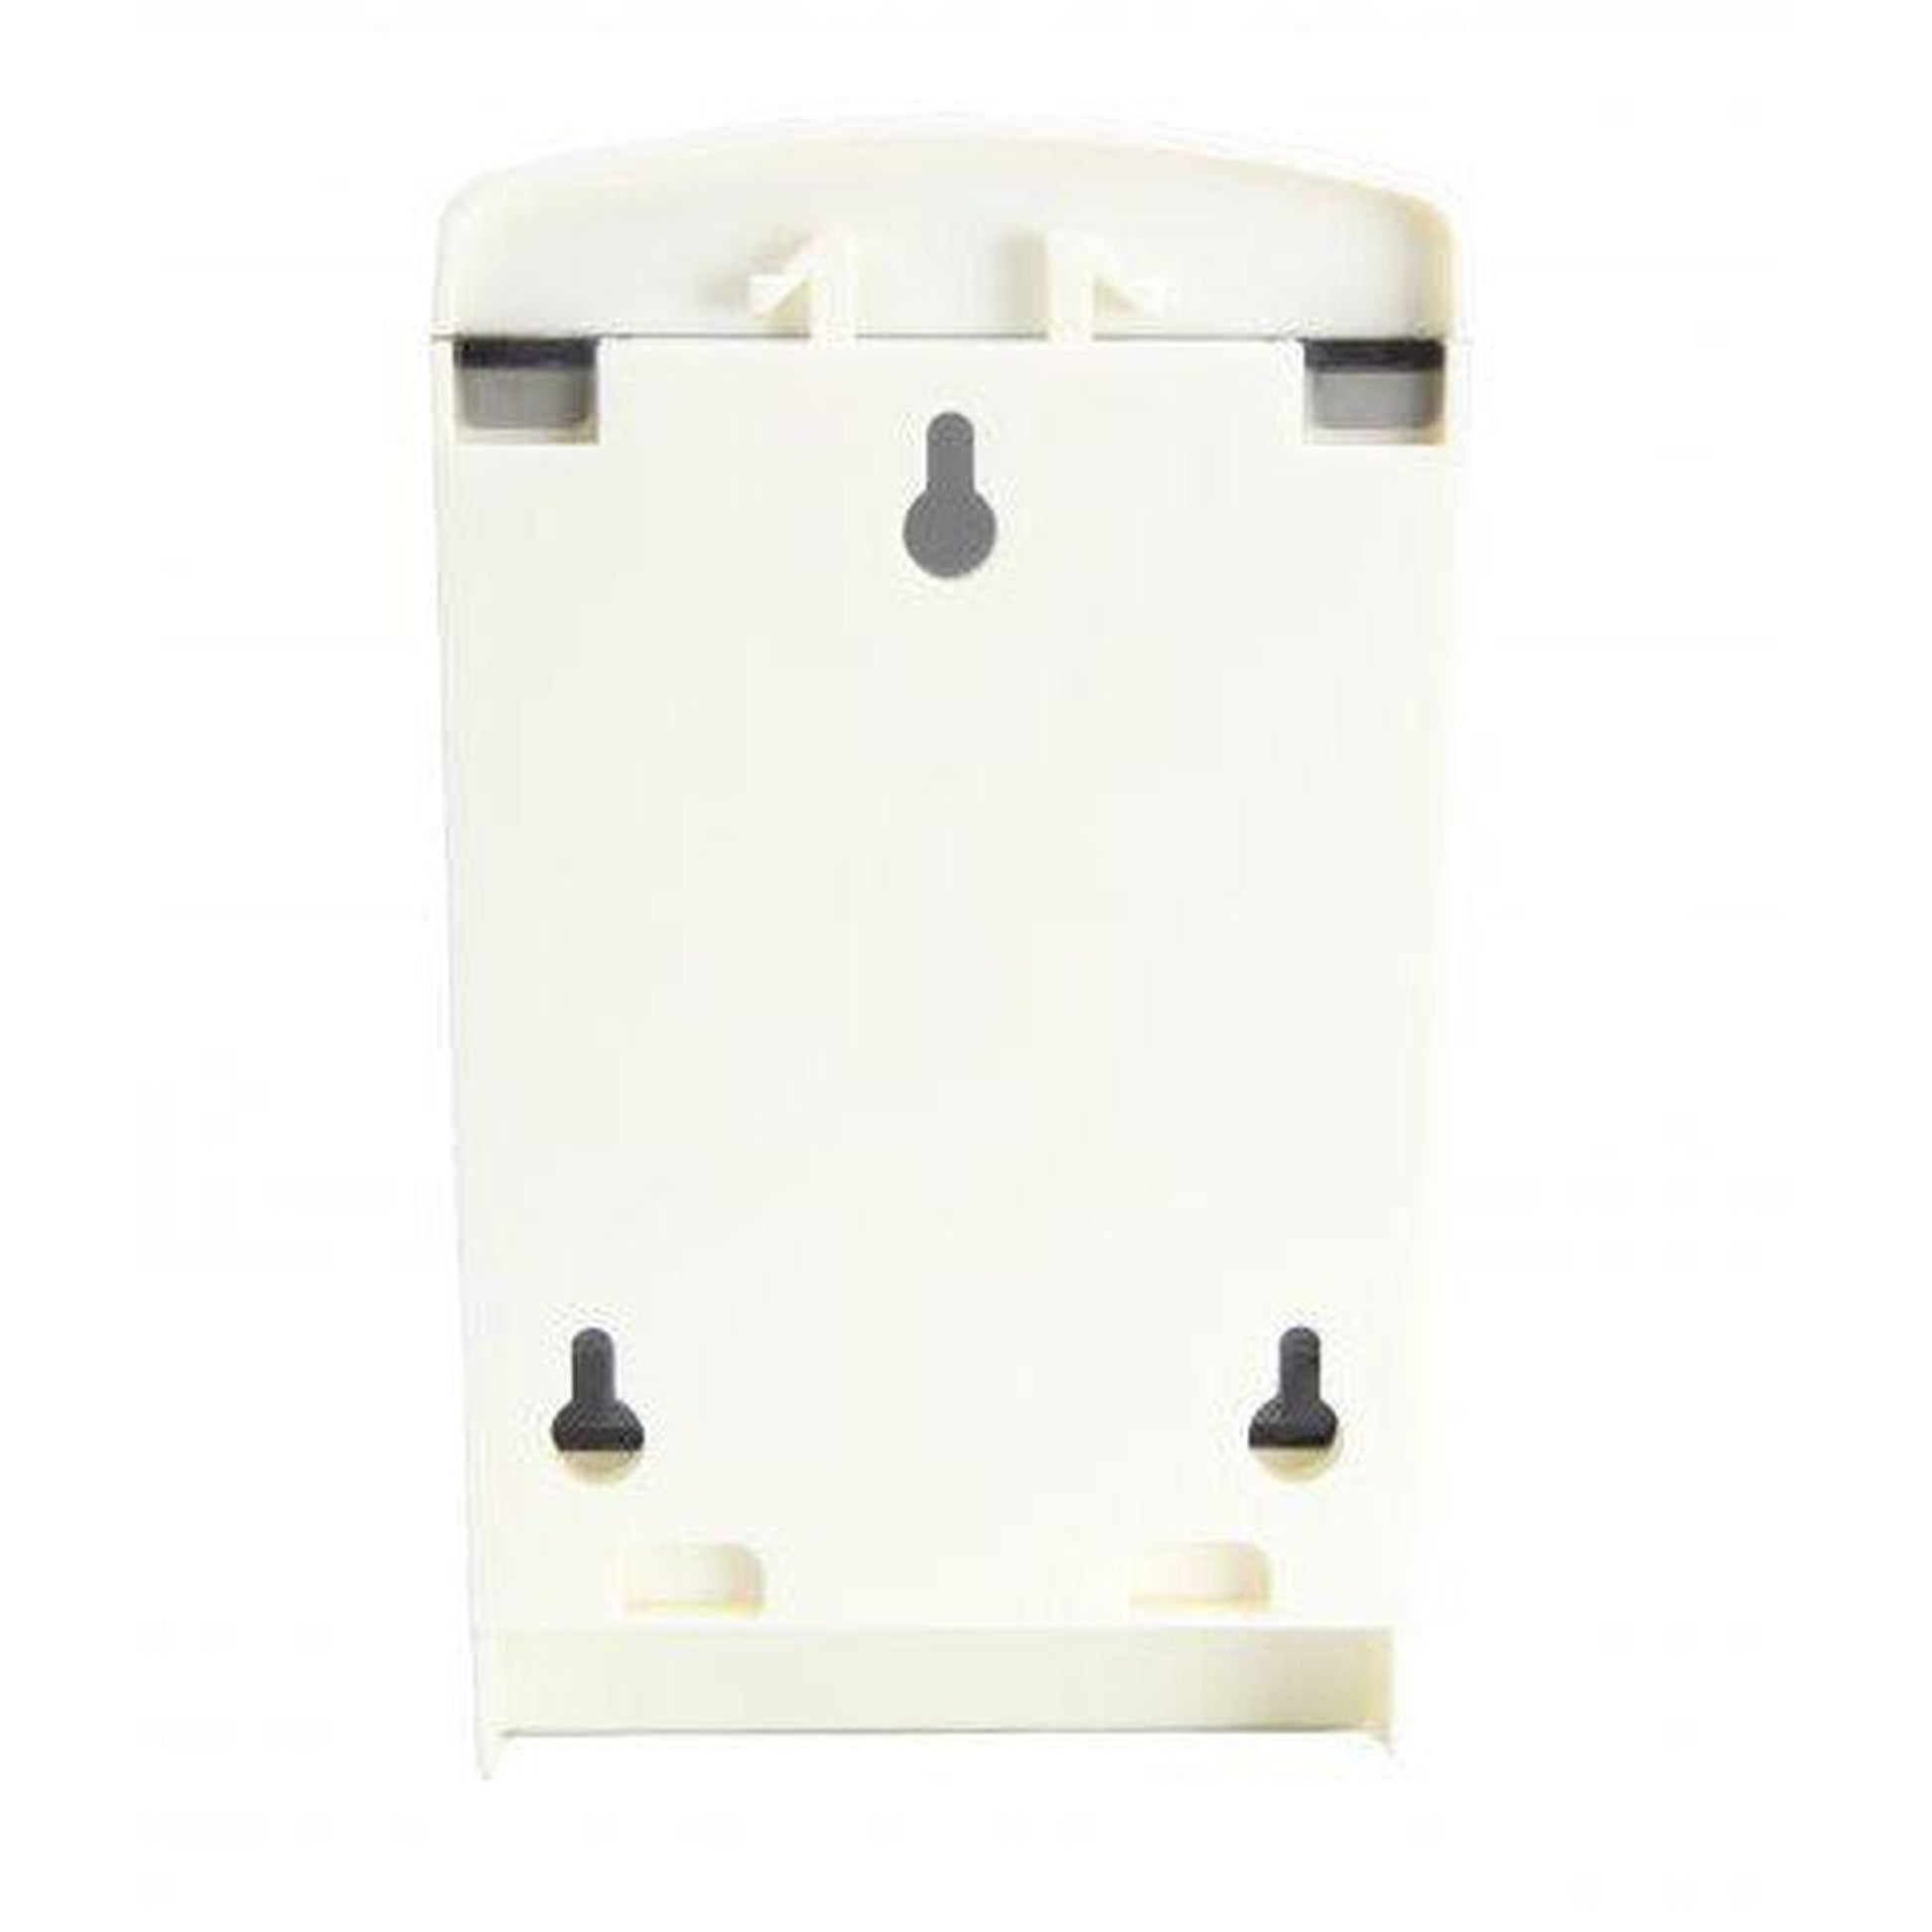 Frost 4.5 x 4.4 x 7.6 White/Black Soap / Sanitizer Dispenser